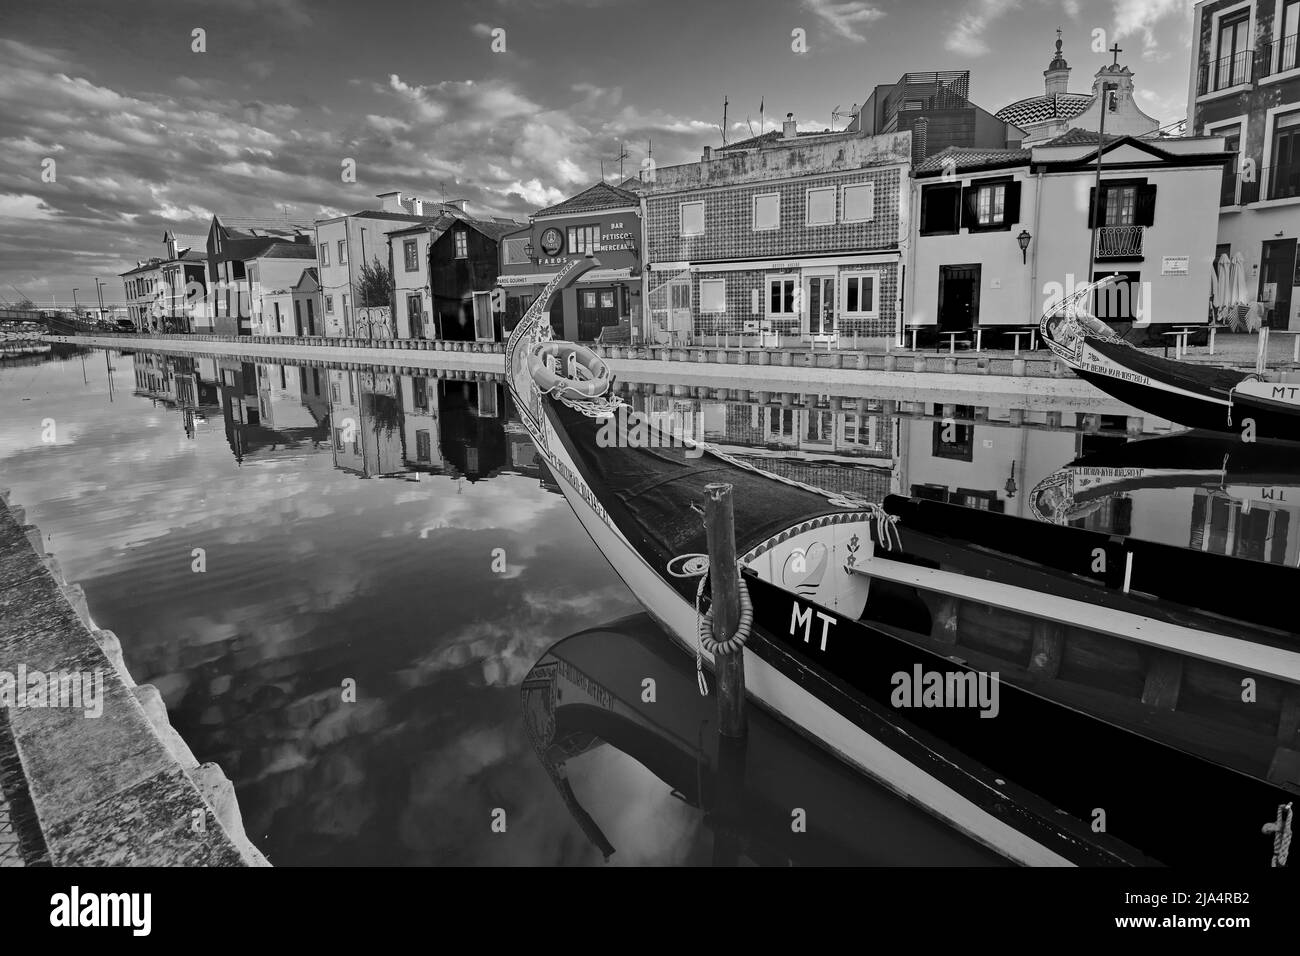 Beliebt bei Touristen Bunte Moliceiros Boot an einem Kanal in Aveiro festgemacht Stockfoto